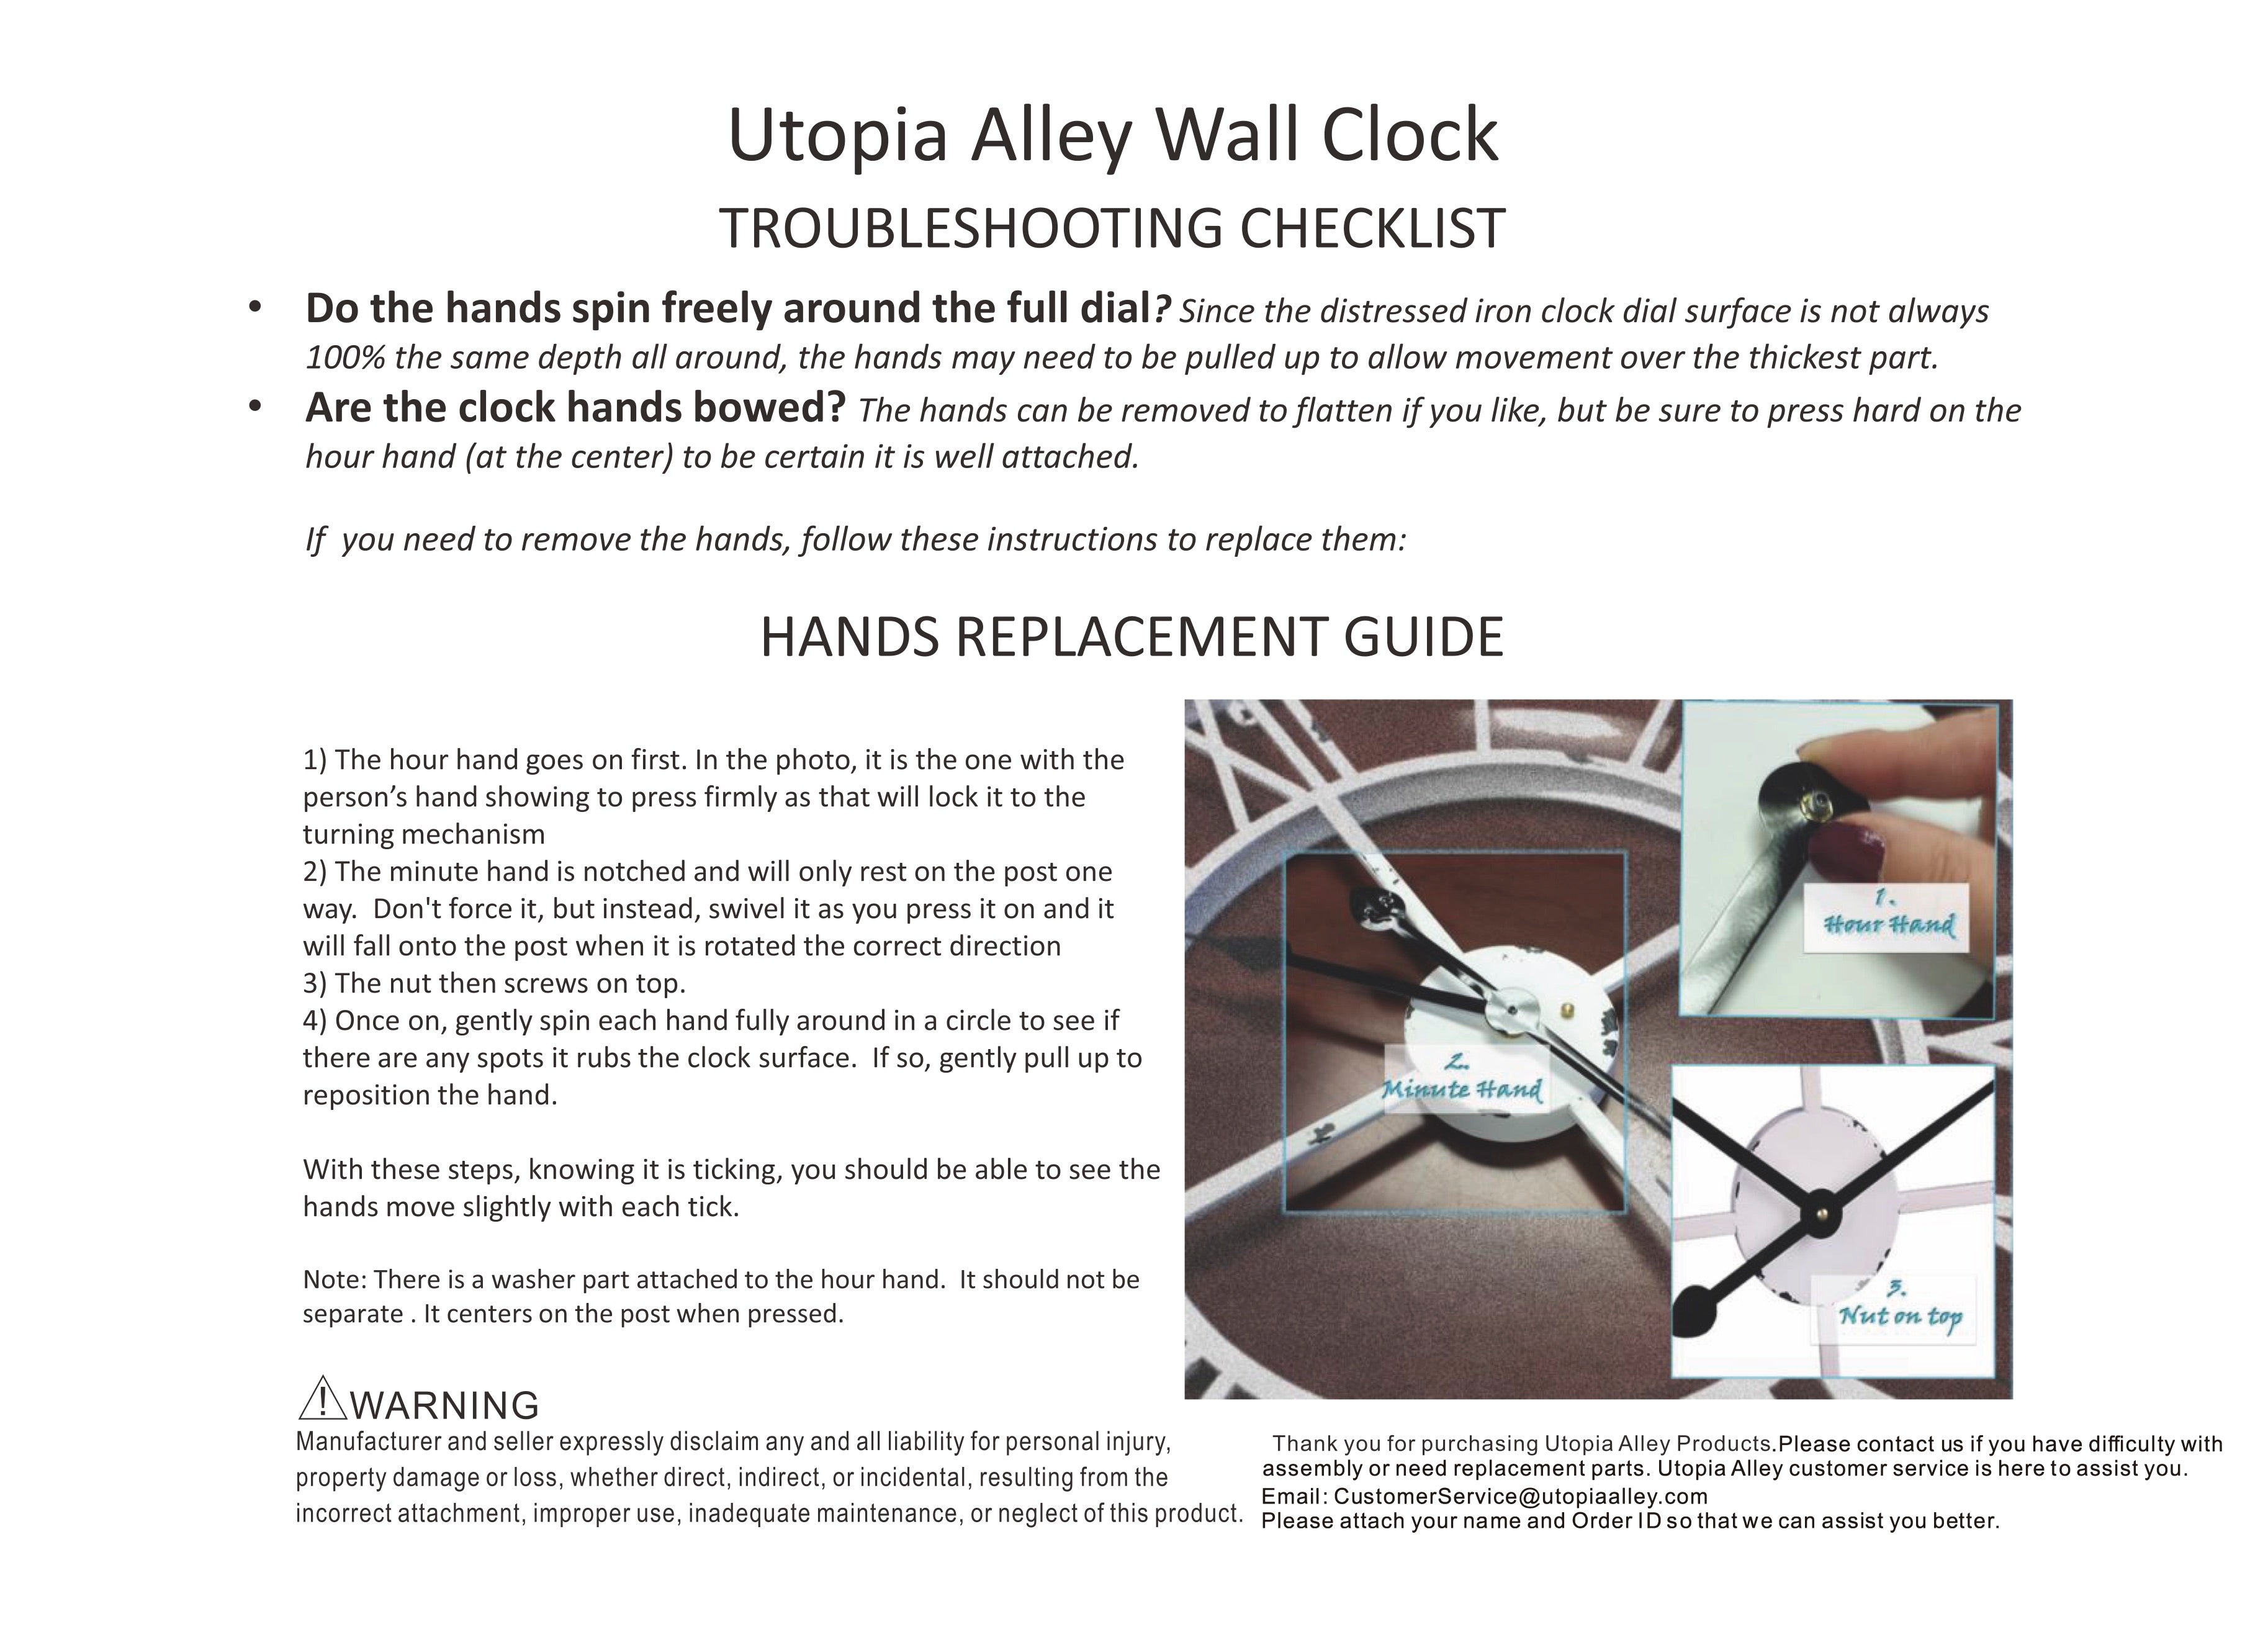 Loft97 CL25WW Rivet Roman Industrial Oversize Wall Clock, White, 45